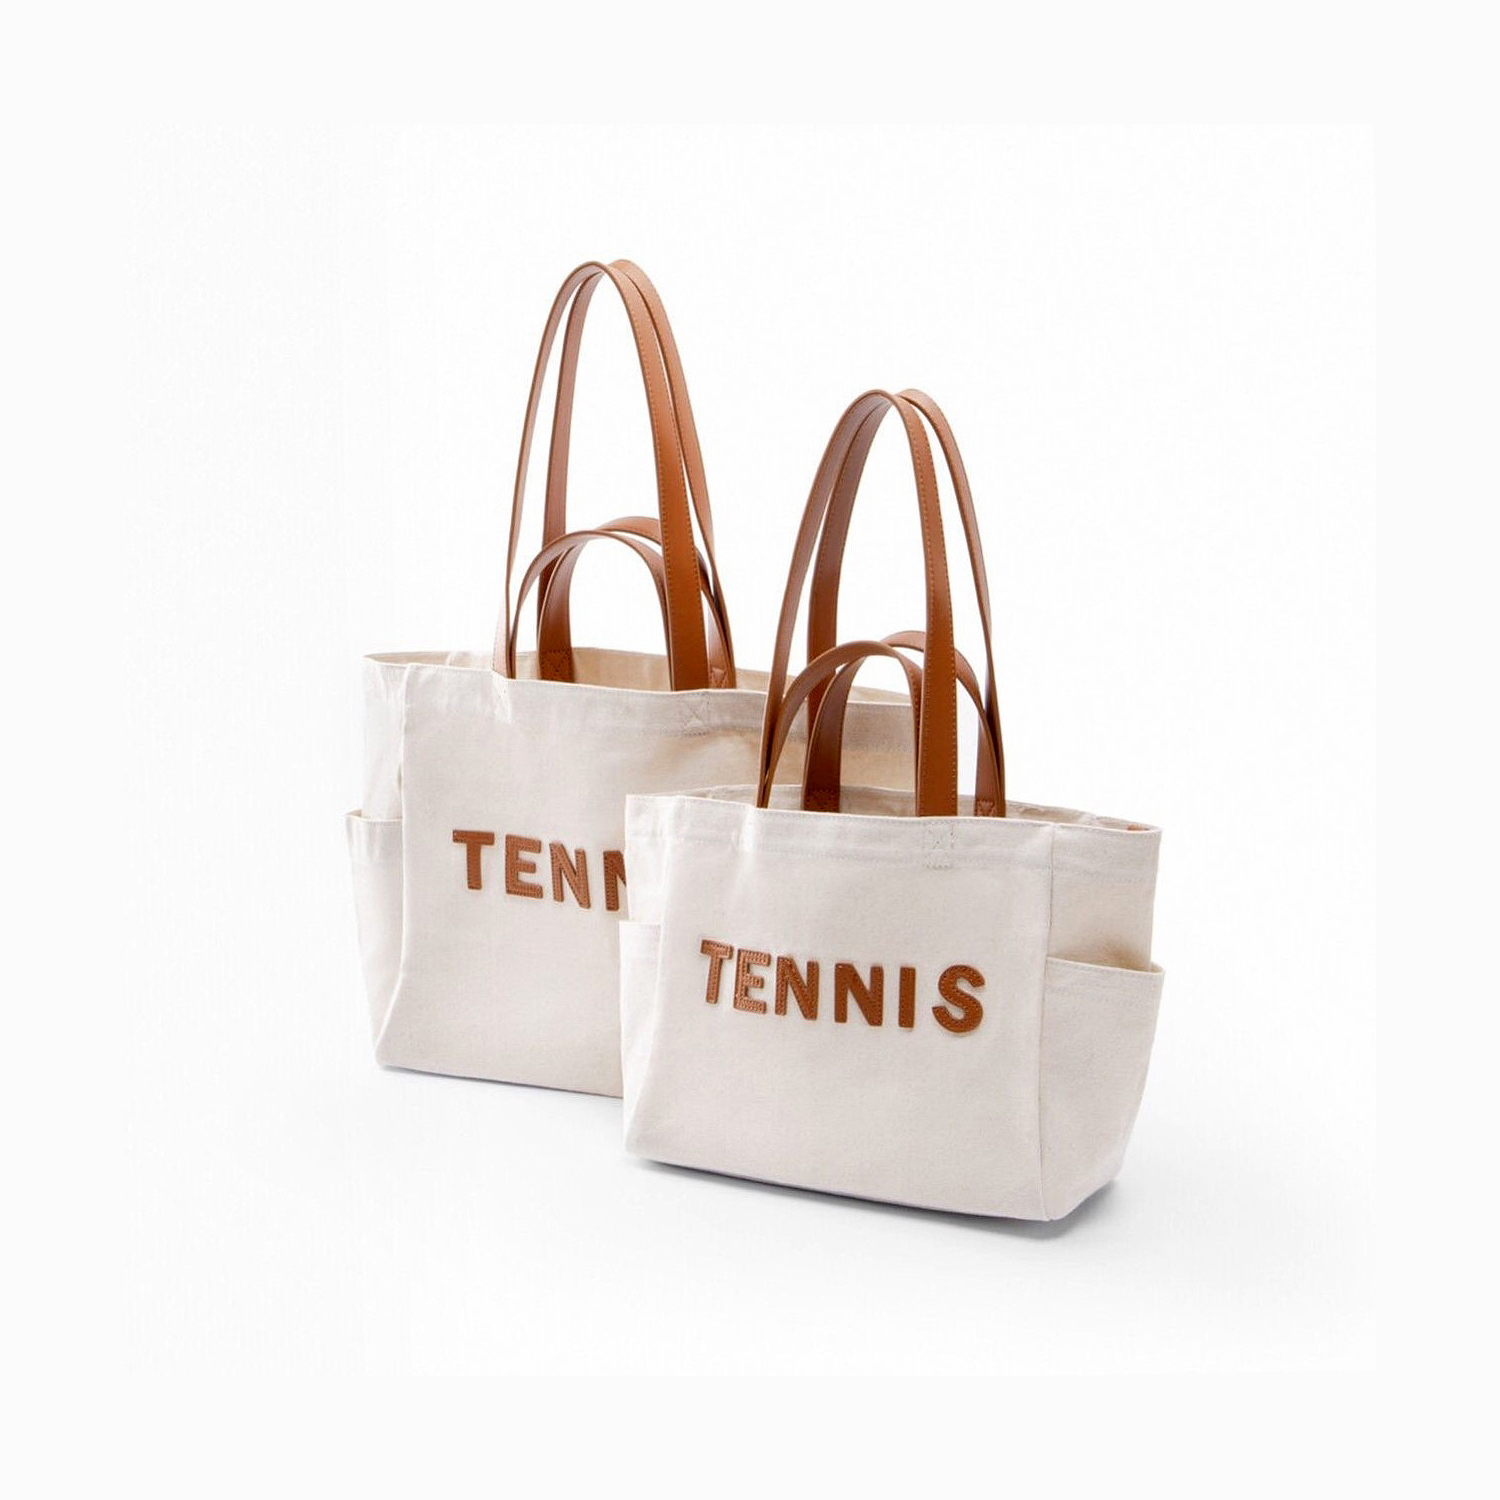 Tennis Eco Bag Cotton Canvas Bag 2 Types